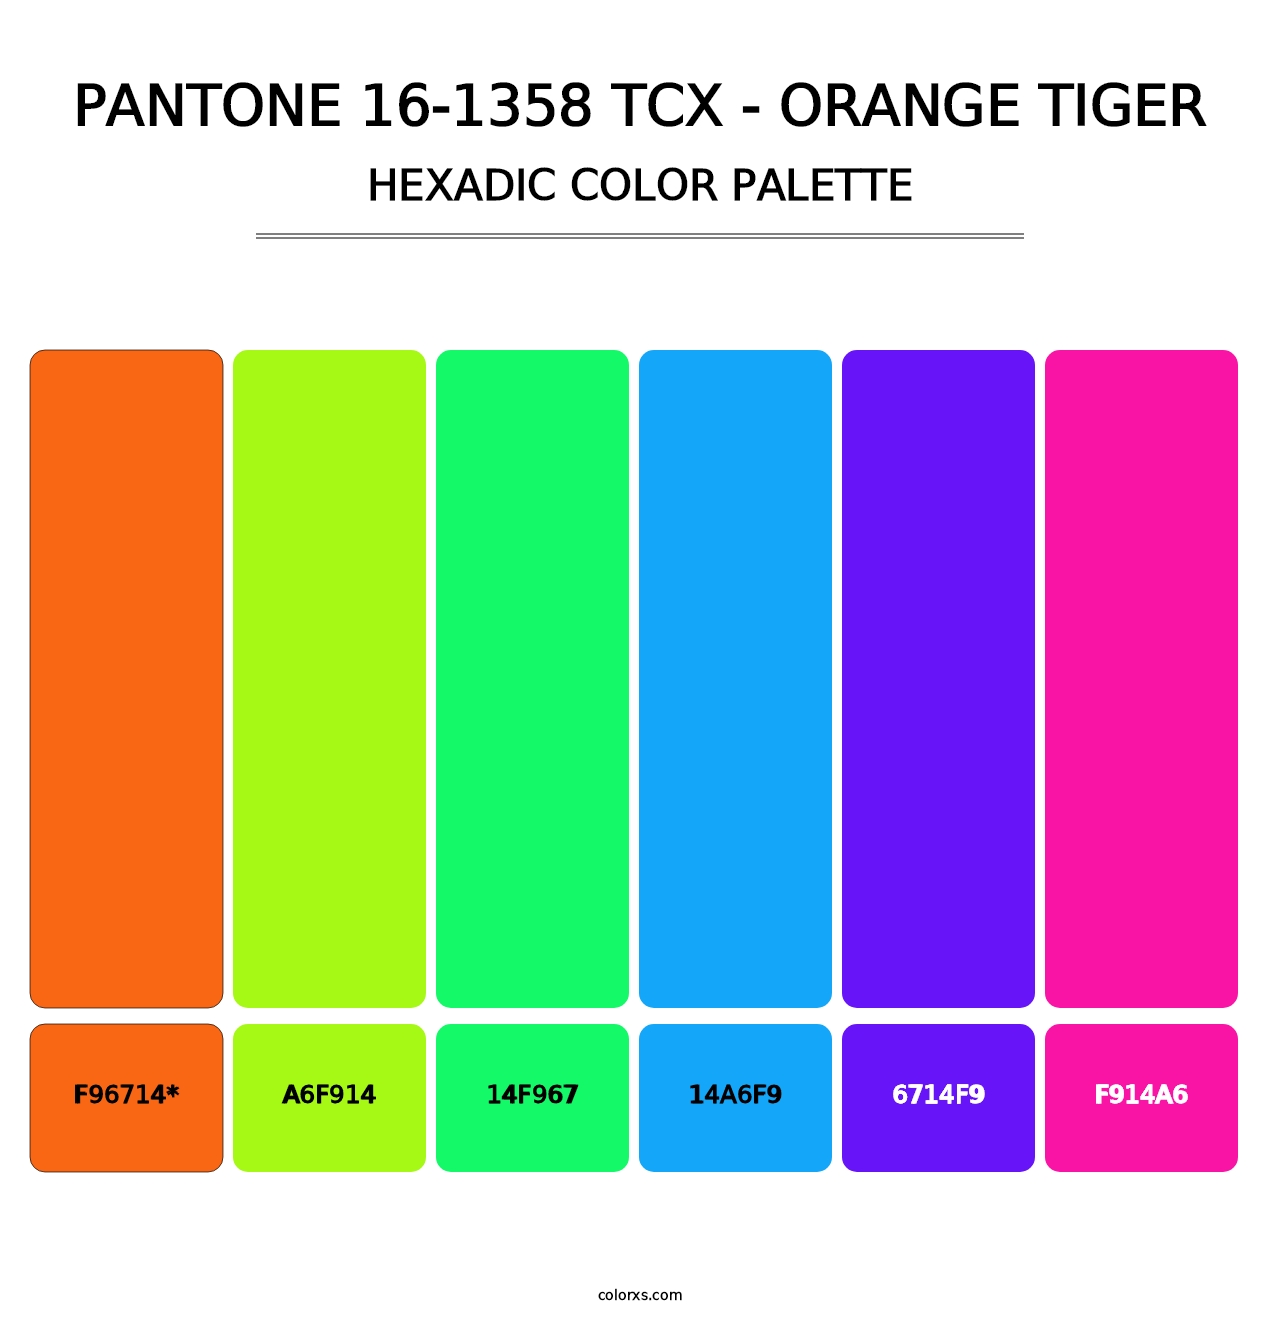 PANTONE 16-1358 TCX - Orange Tiger - Hexadic Color Palette